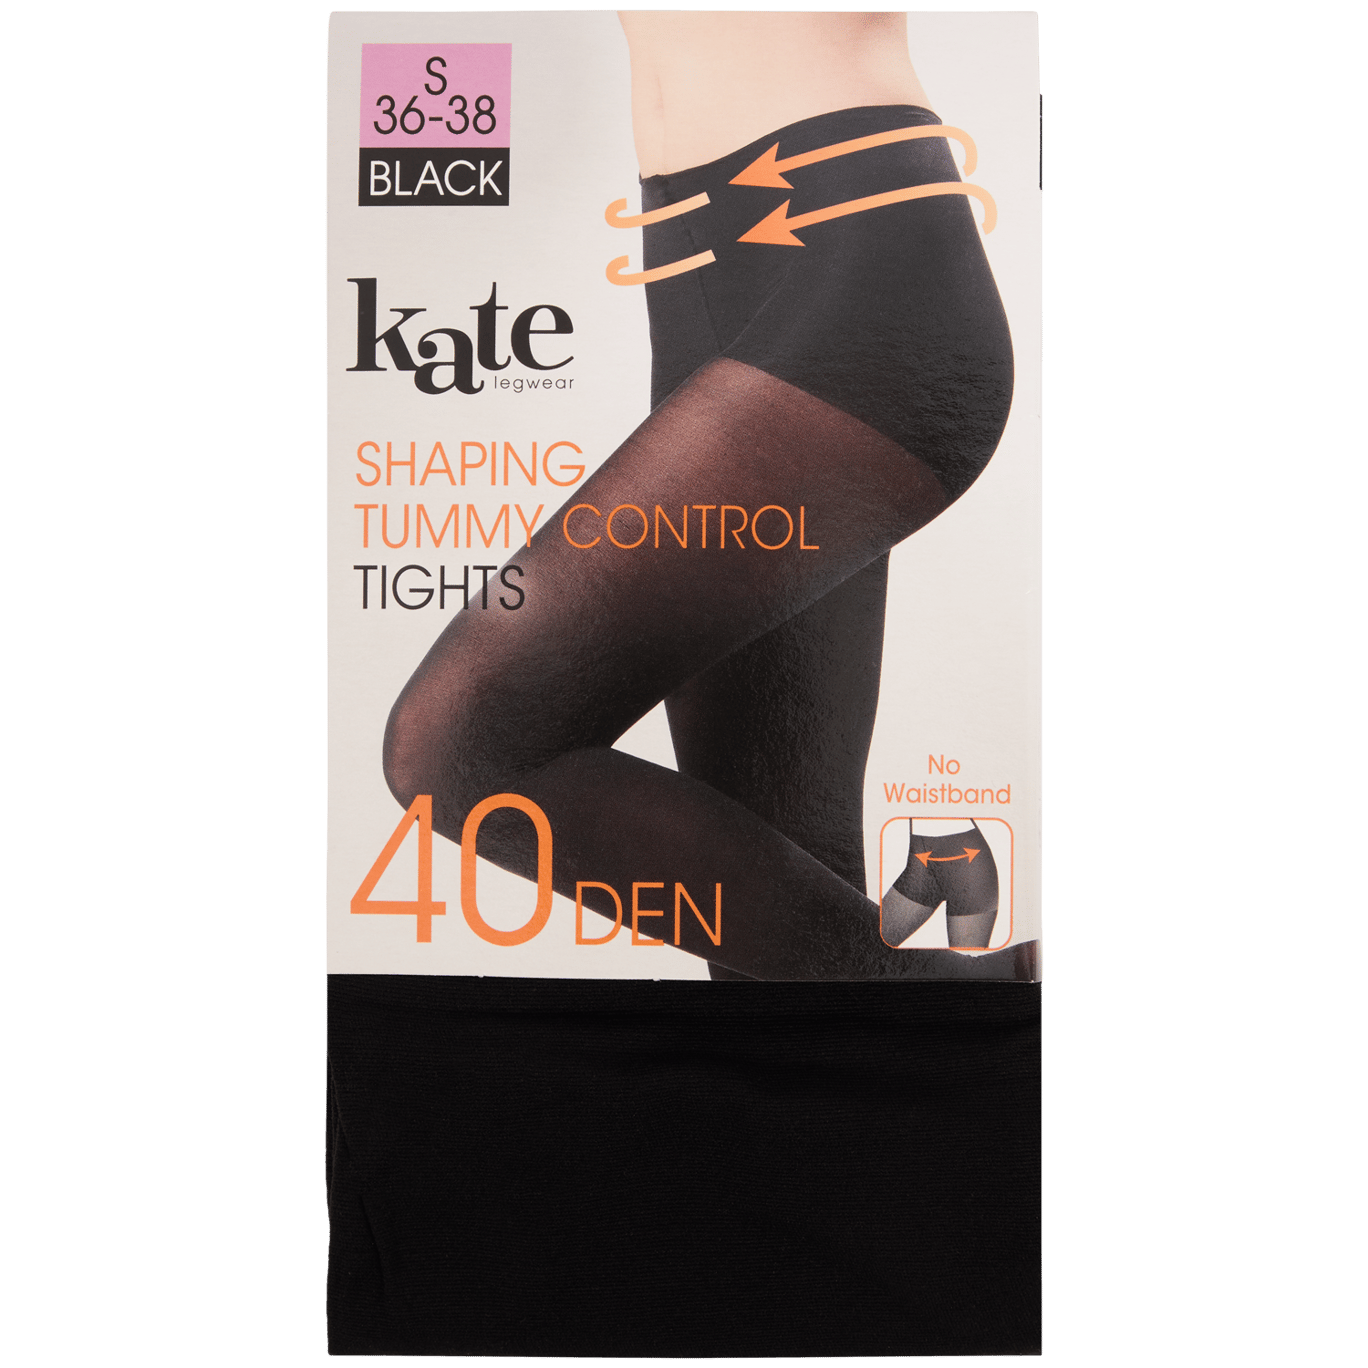 Kate Legwear Tummy Control shaping panty 40 denier